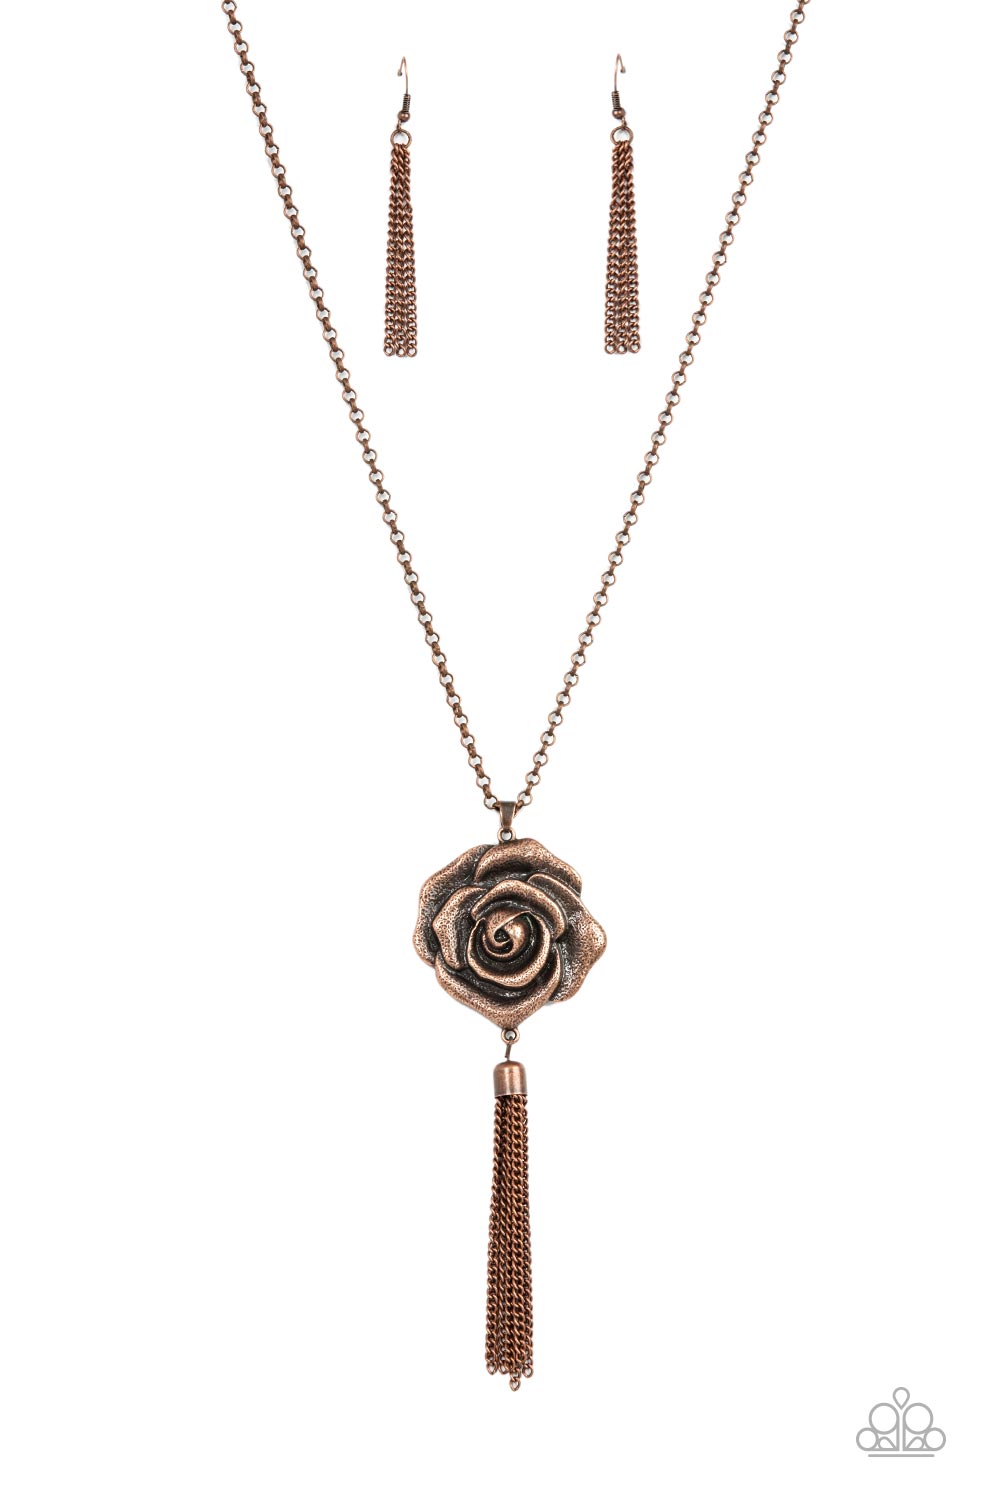 Rosy Redux - Copper necklace